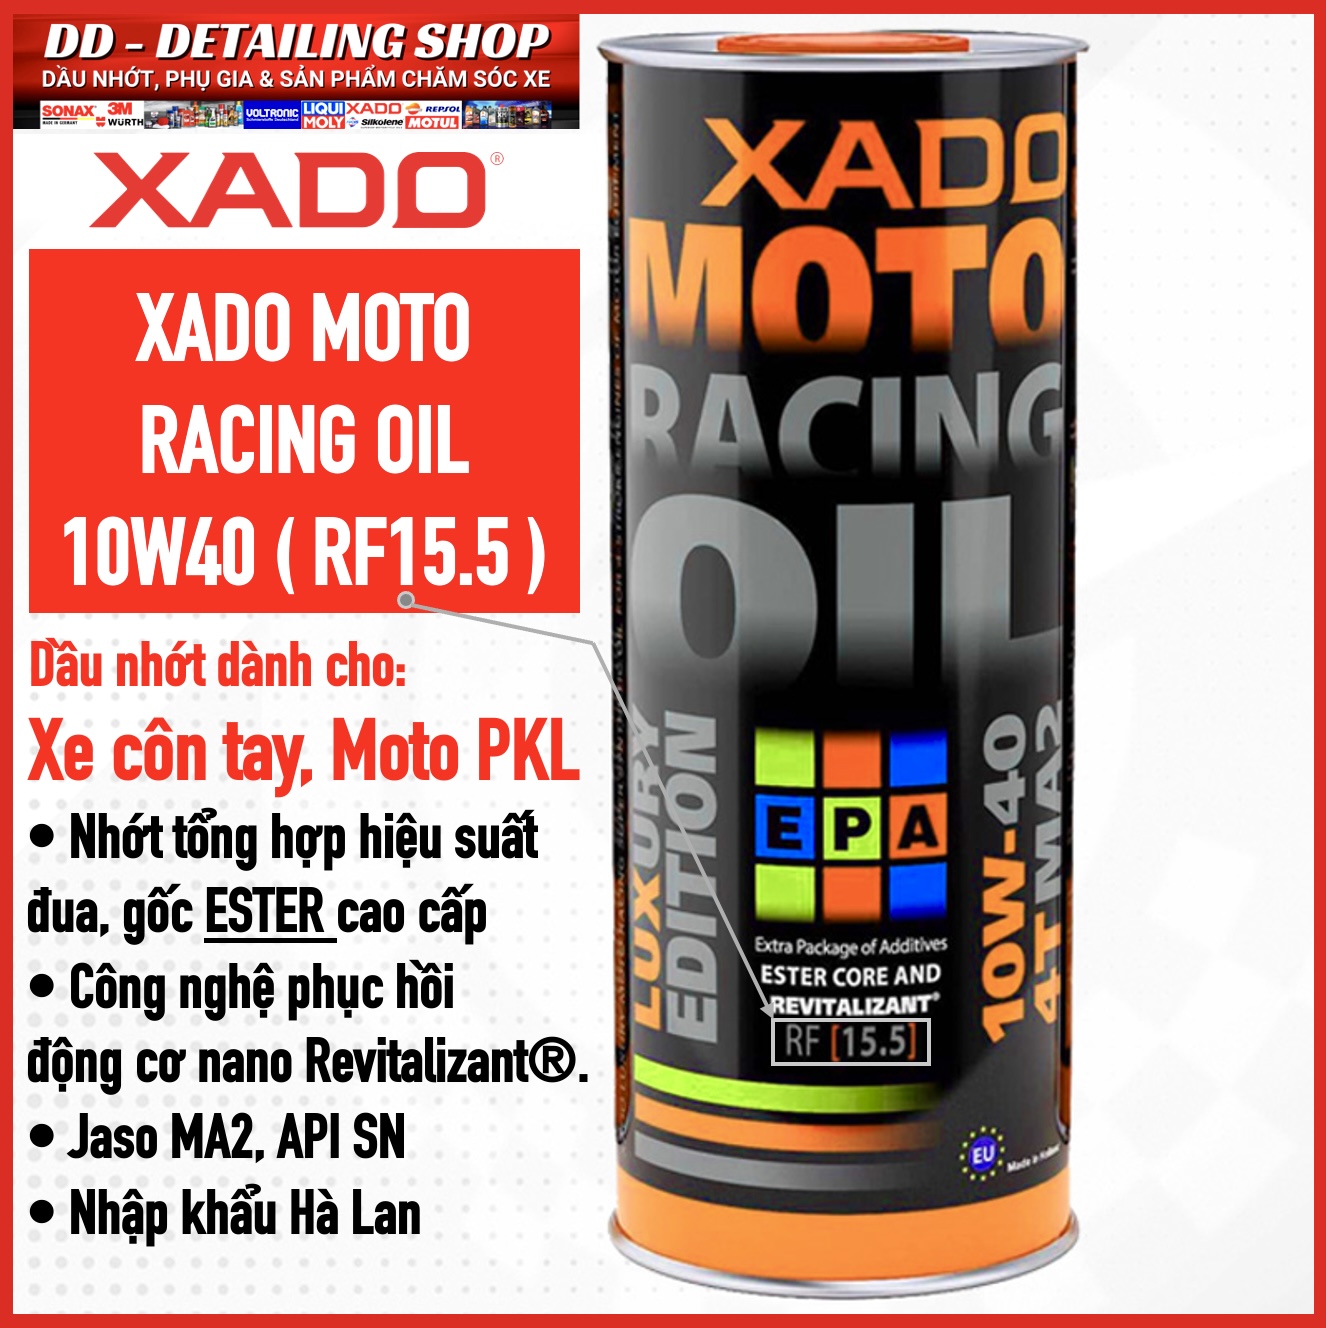 XADO LUXURY MOTO RACING 4T MA2 10W40 Fully synthetic lubricant for